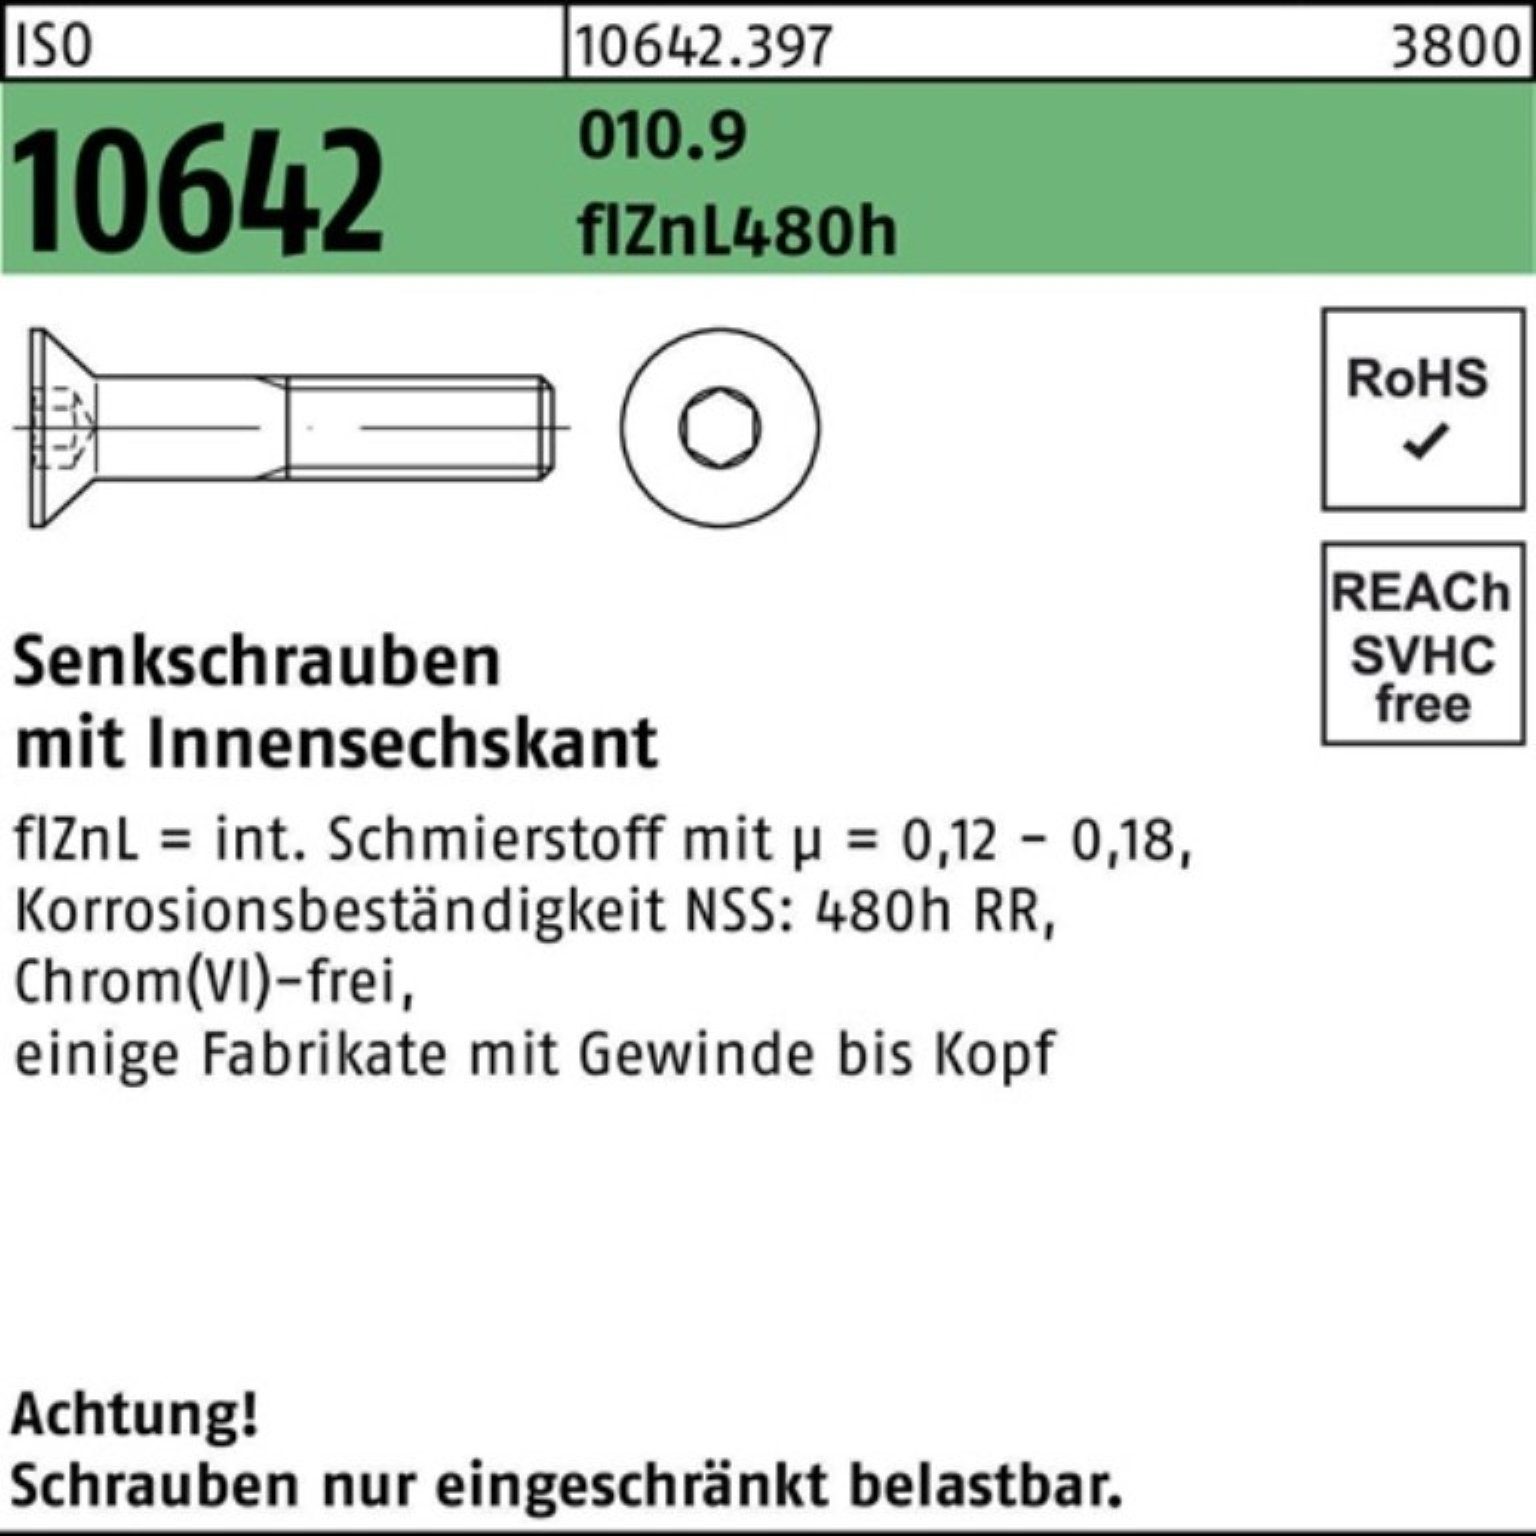 Reyher Senkschraube 200er Pack Senkschraube ISO 10642 Innen-6kt M8x20 010.9 flZnL 480h zin